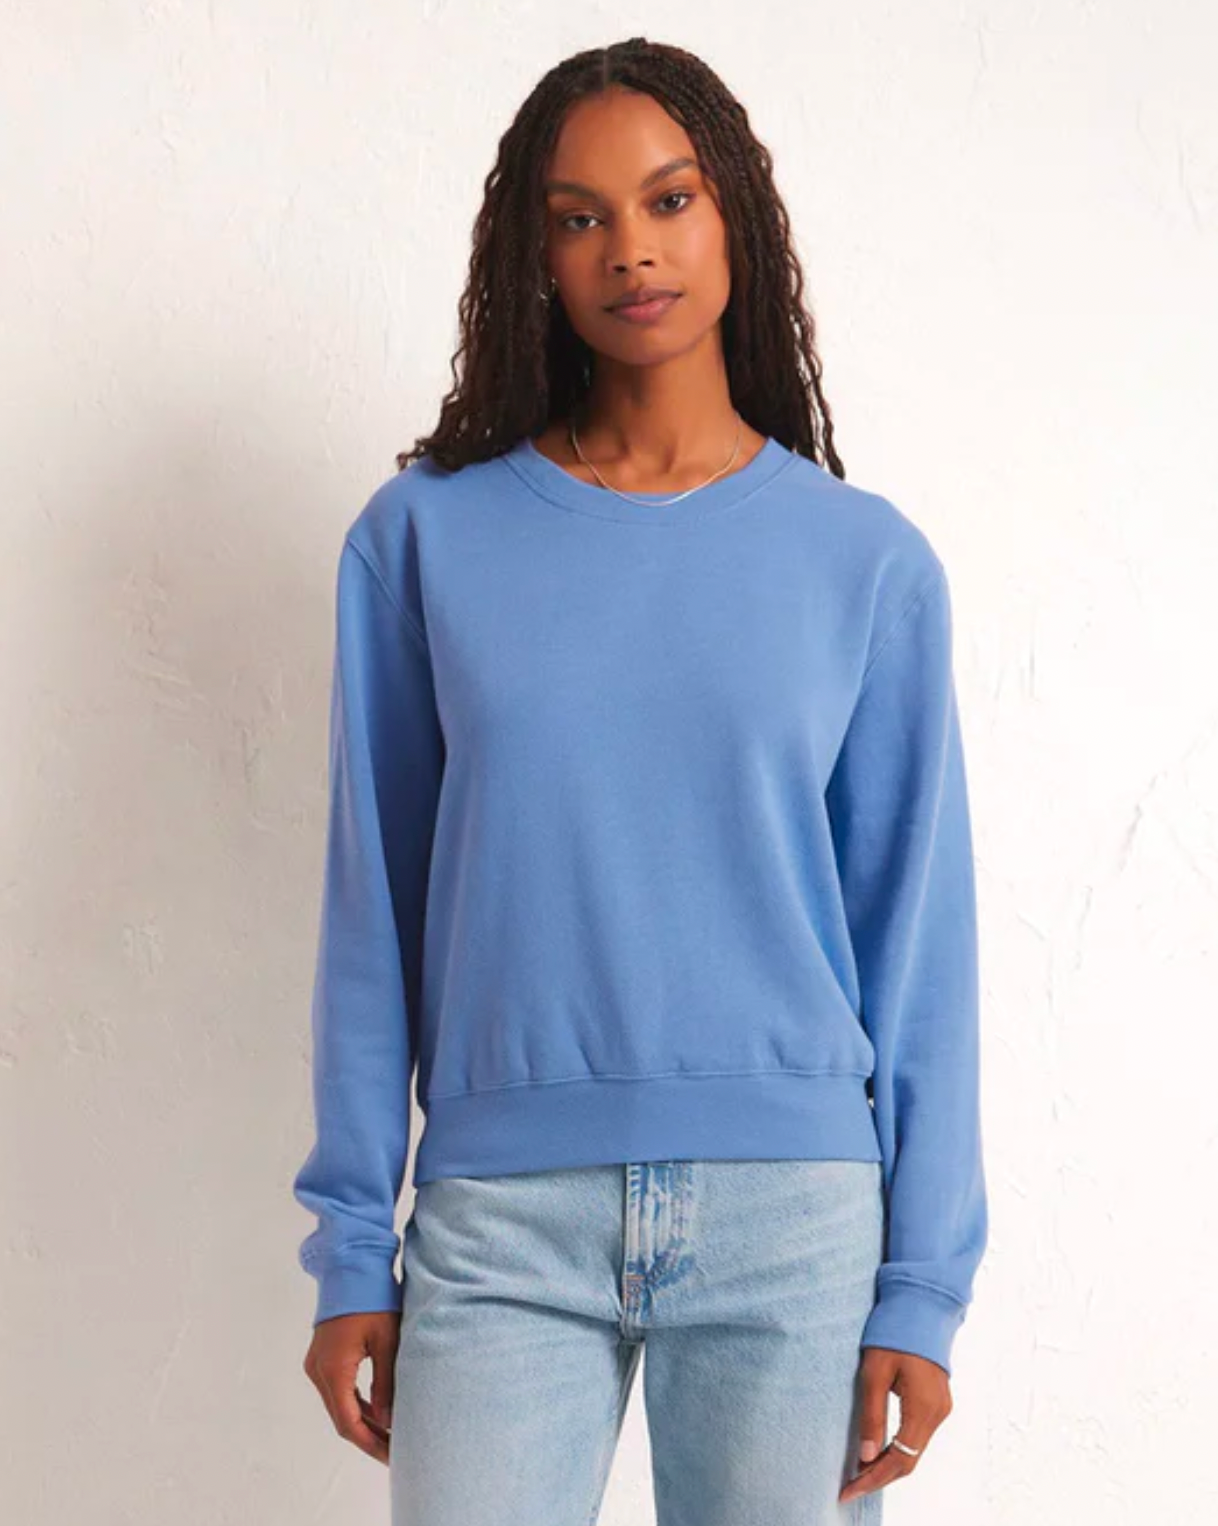 Model wearing Z Supply Blue Classic Crew Sweatshirt wearing jeans on a white background